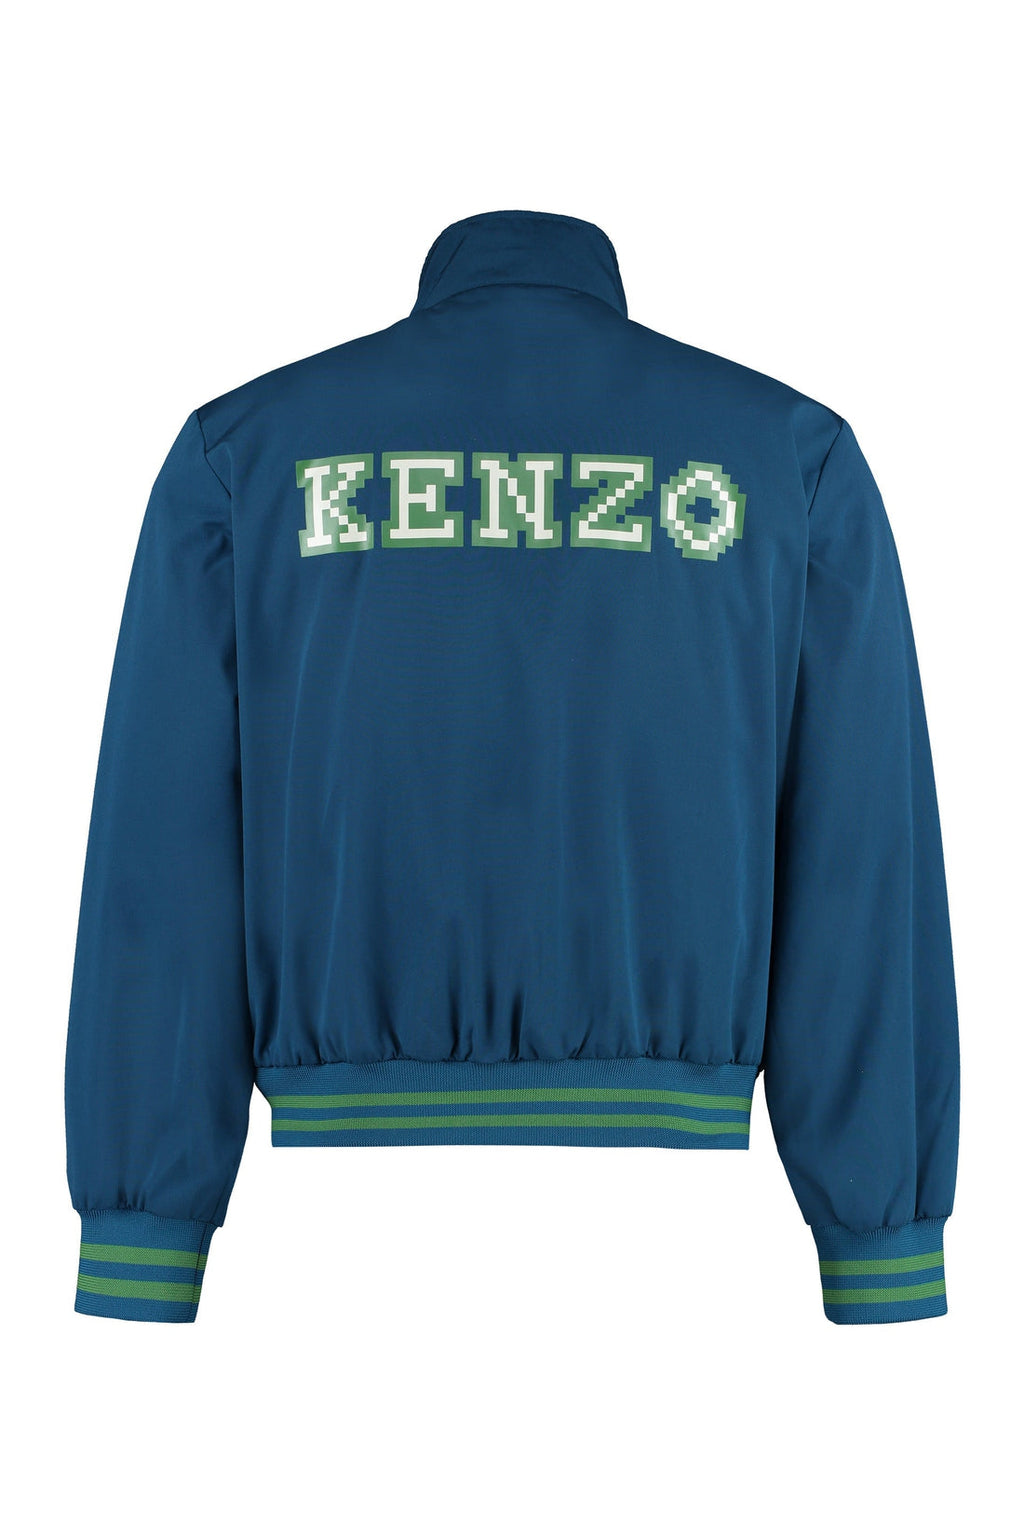 Kenzo-OUTLET-SALE-Nylon bomber jacket-ARCHIVIST